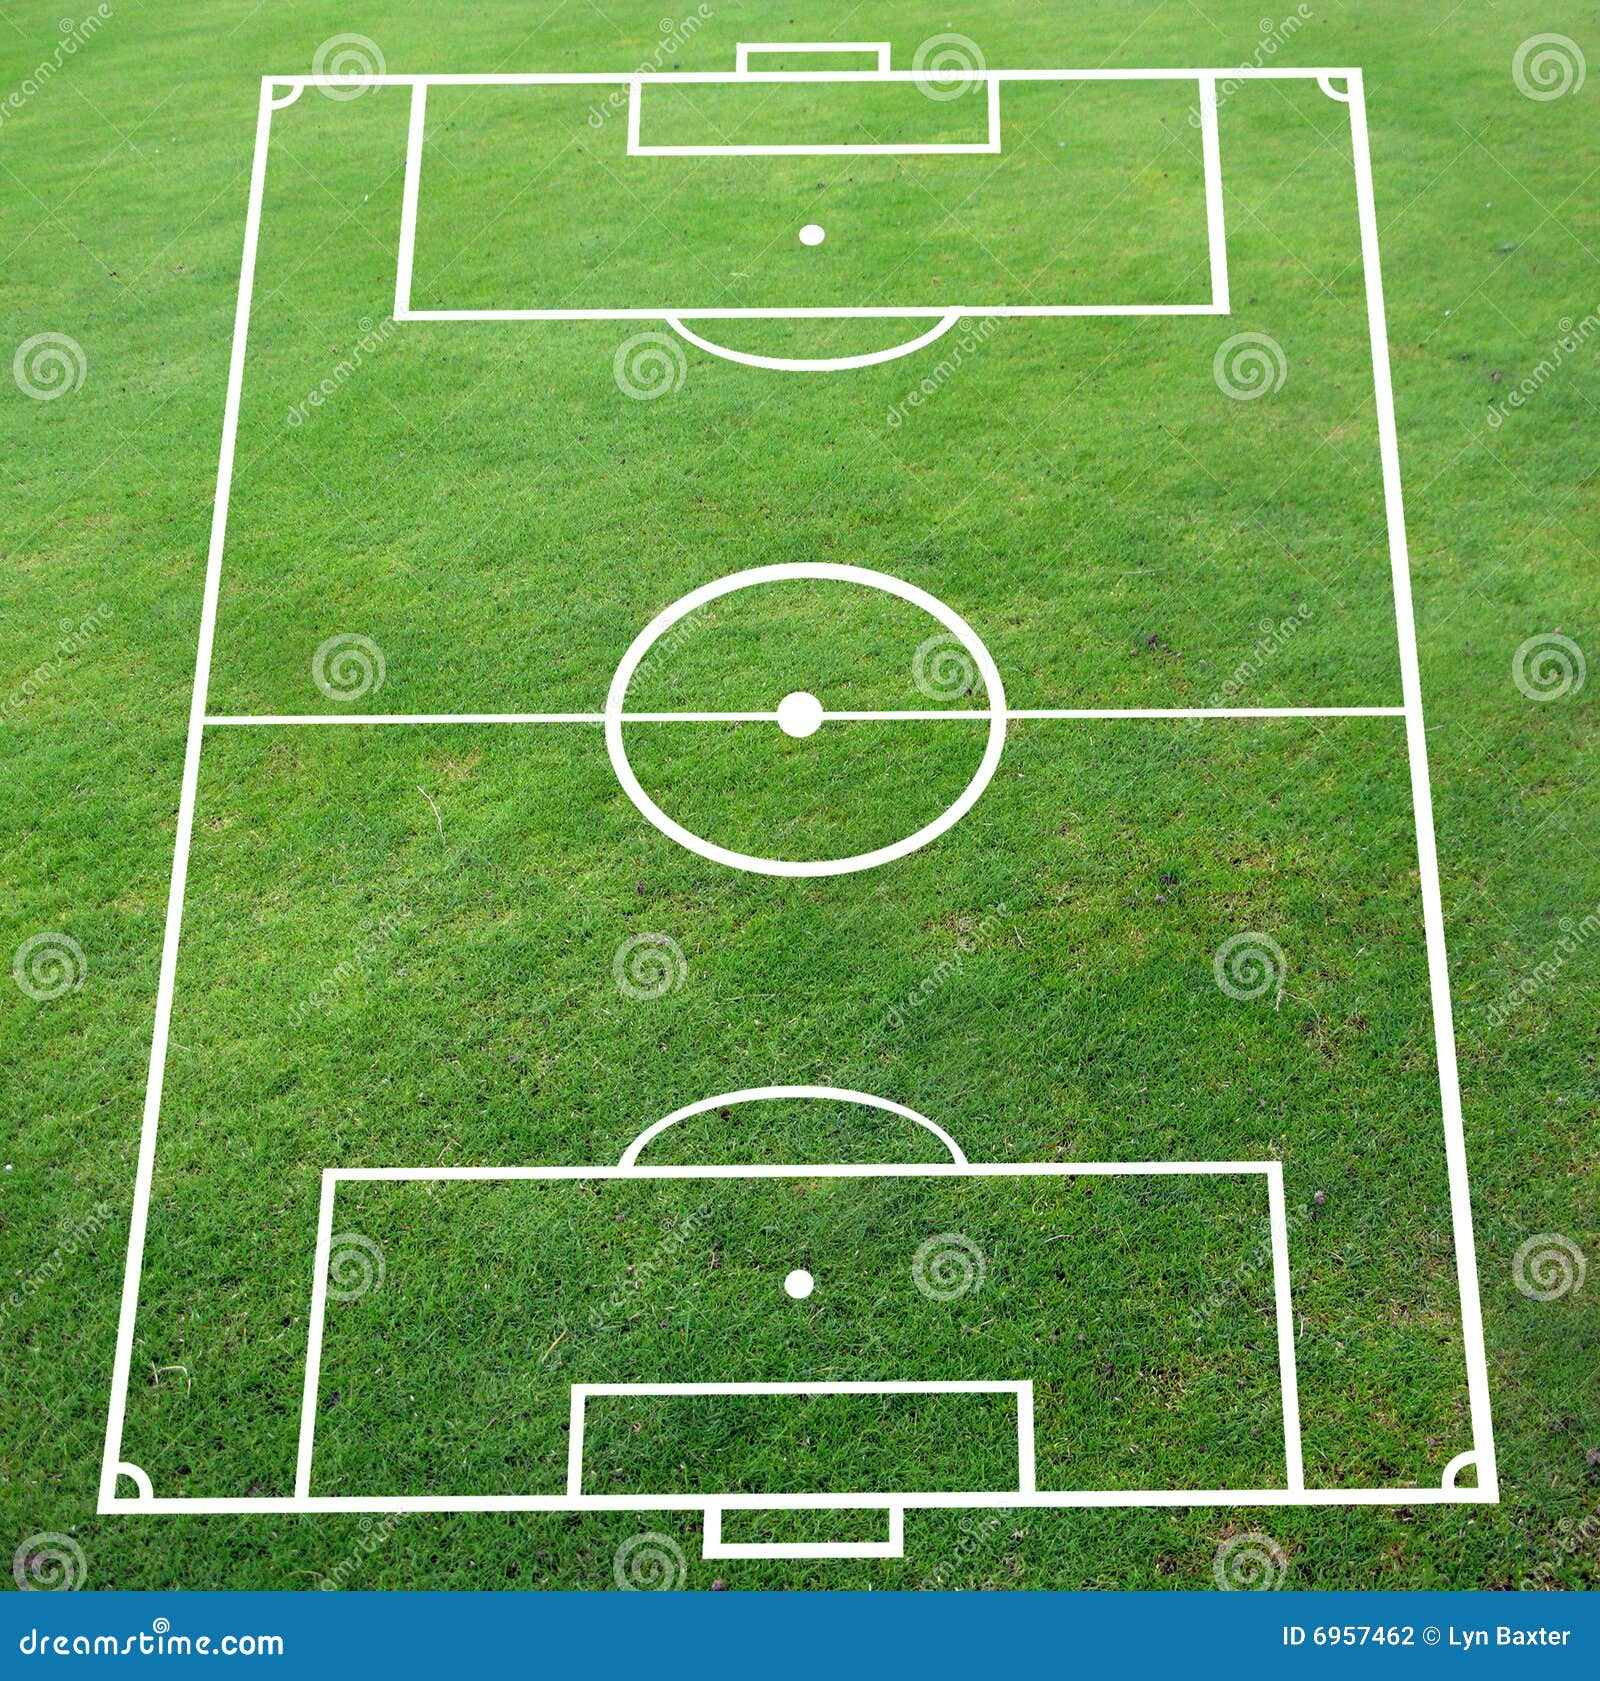 soccer pitch